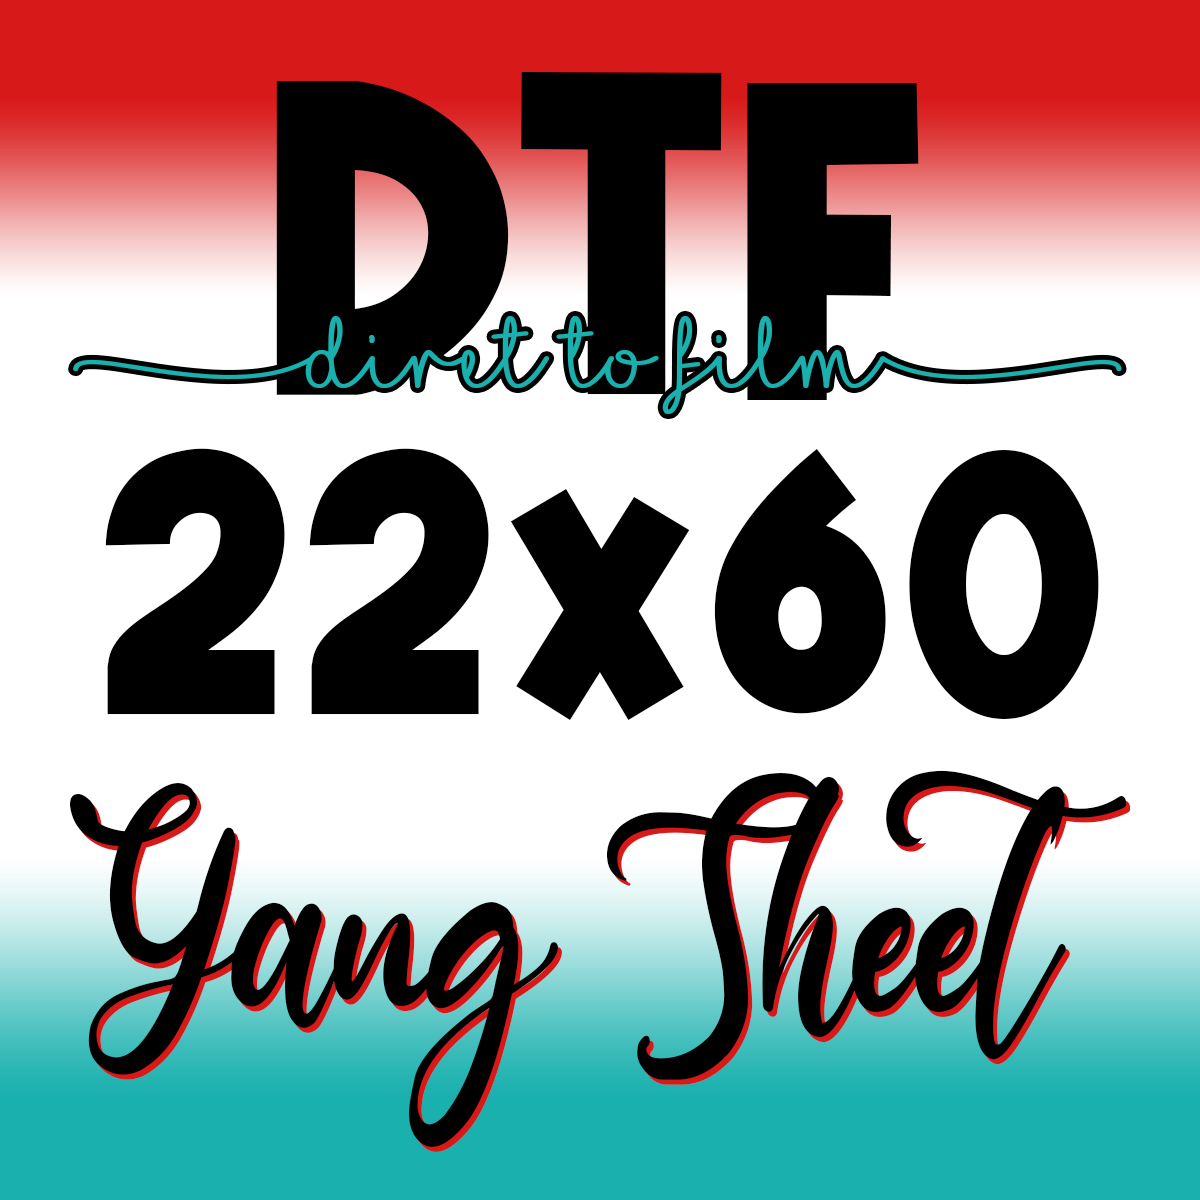 DTF Gang Sheet 22"x60"